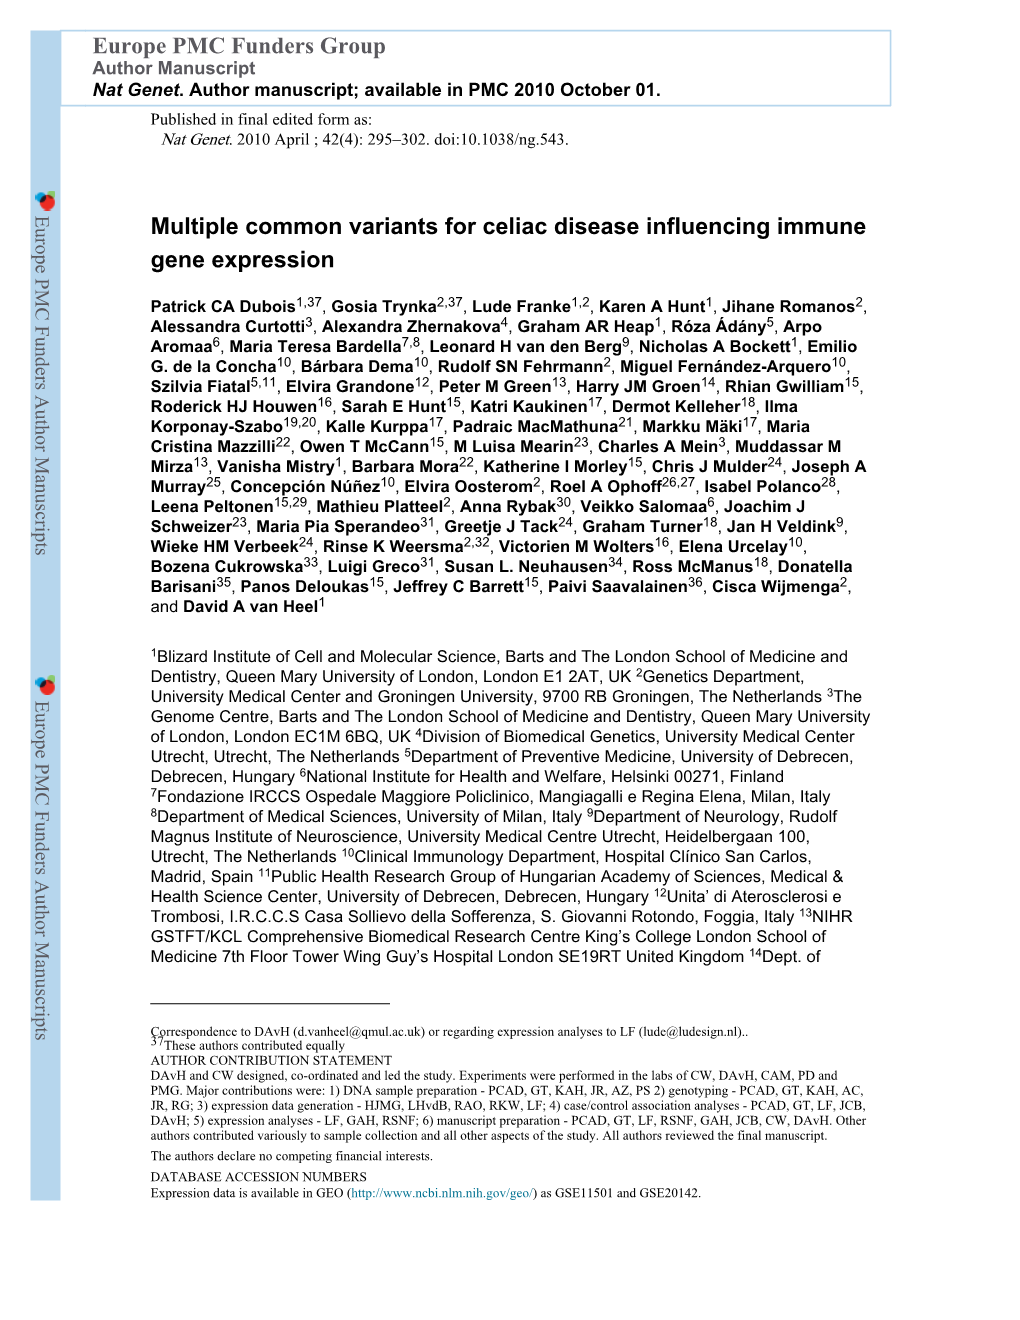 Multiple Common Variants for Celiac Disease Influencing Immune Gene Expression